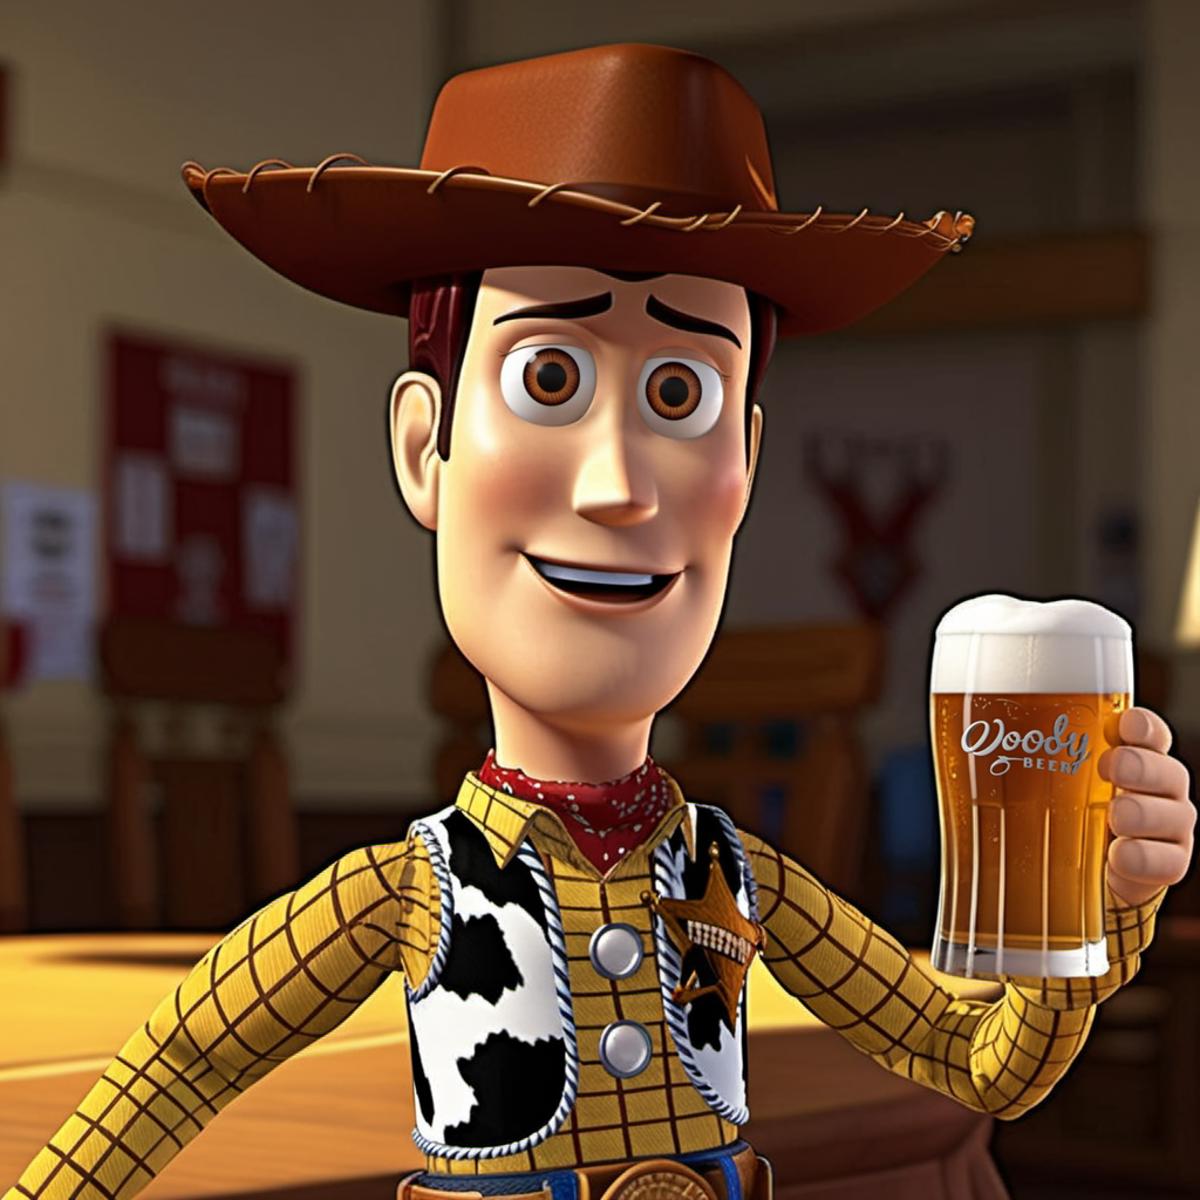 Sheriff Woody - Toy Story - SDXL image by PhotobAIt